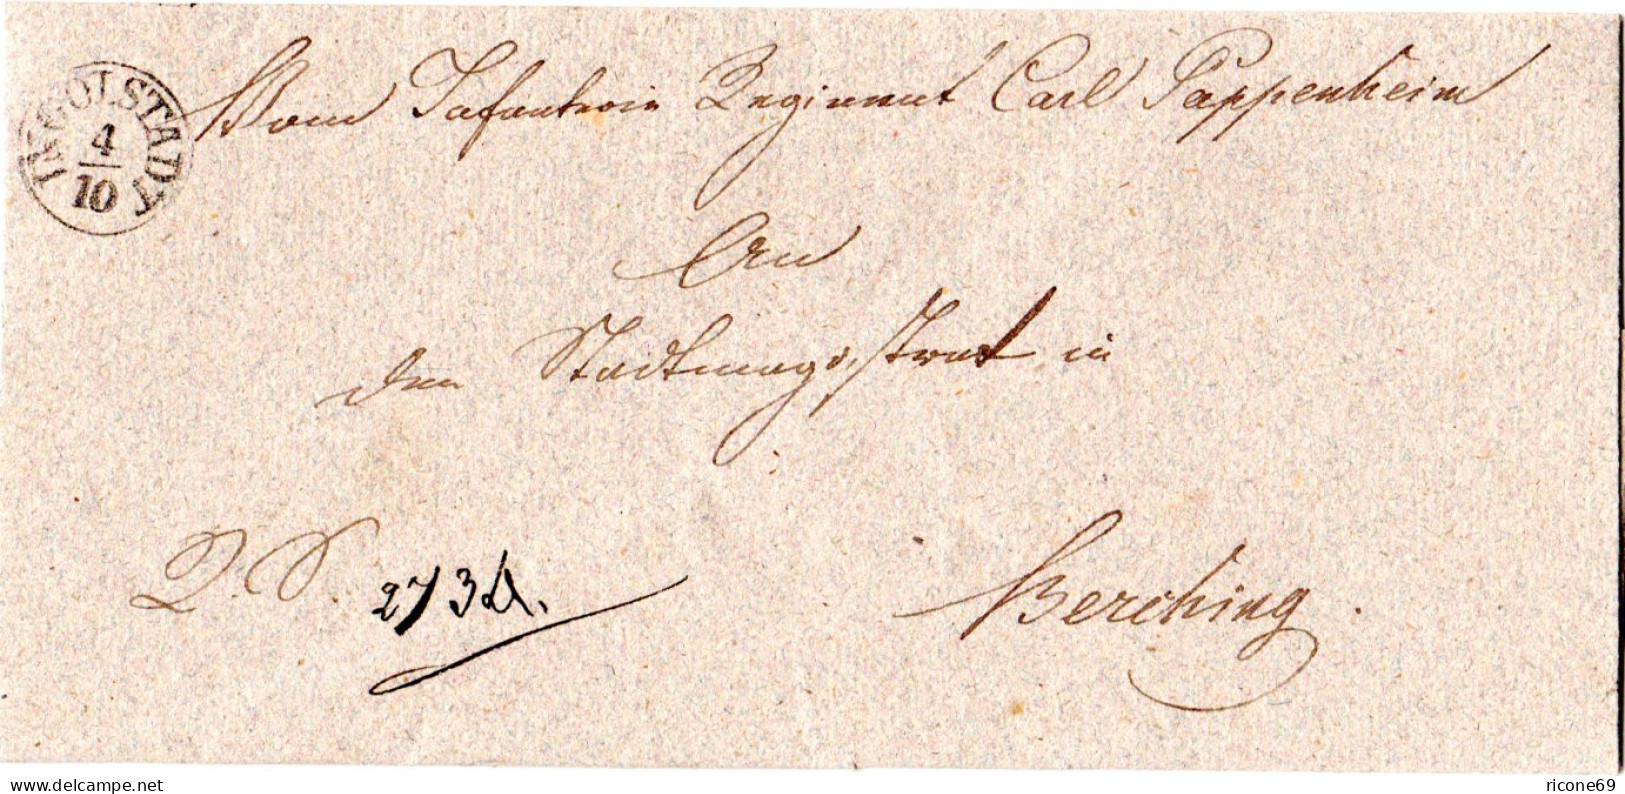 Bayern 1838, Fingerhutstpl. Ingolstadt Klar Auf Militär Brief N. Berching - Prefilatelia